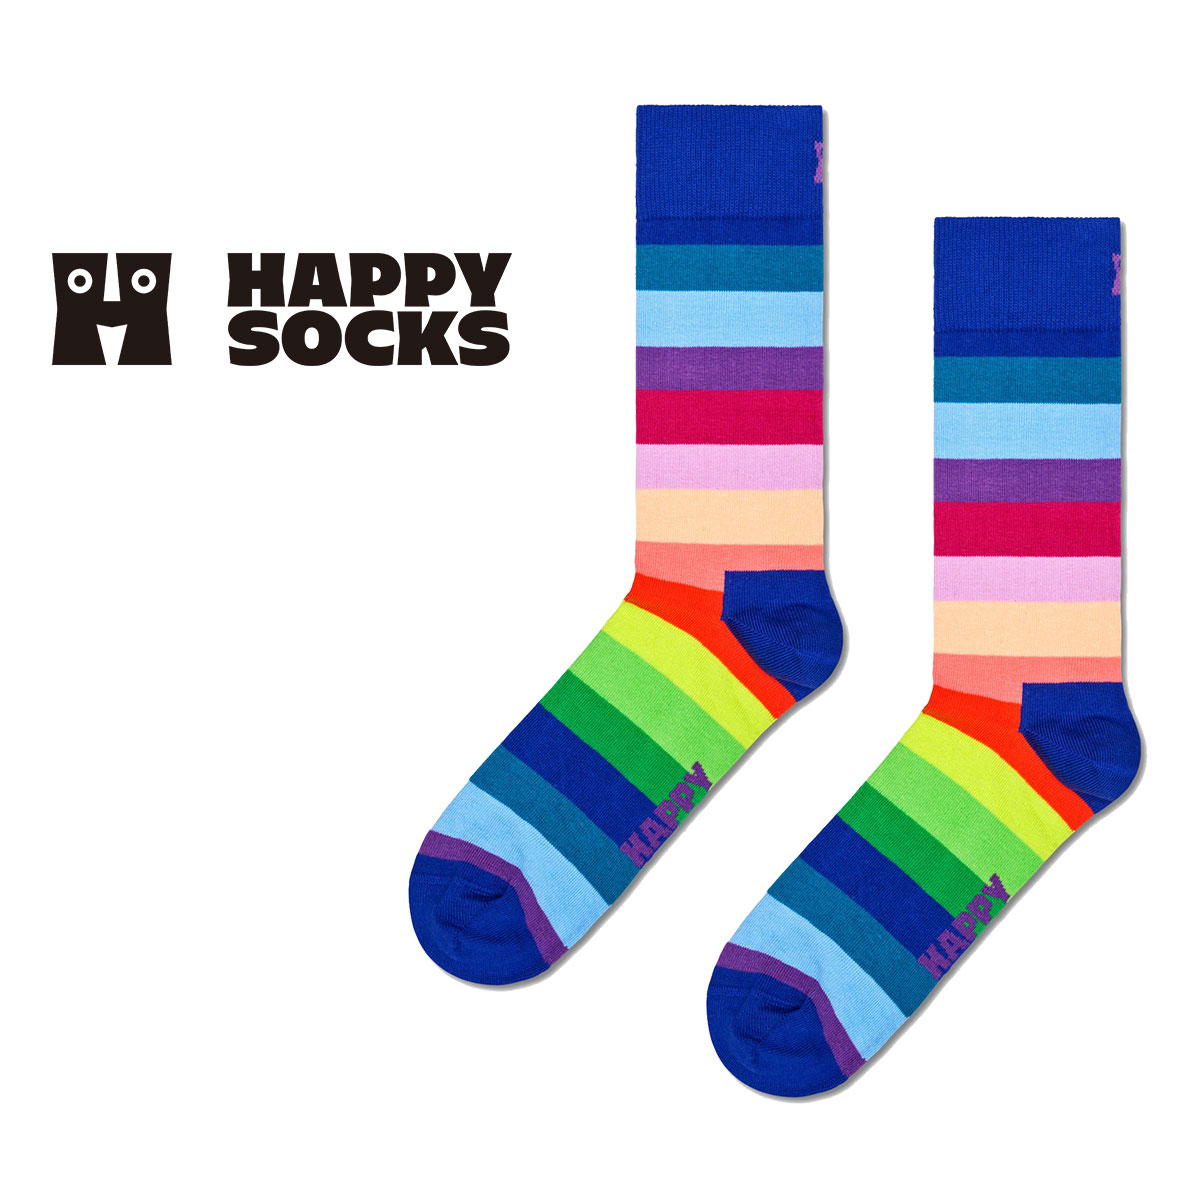 【24SS】Happy Socks ハッピーソックス Stripe ( ストライプ ) クルー丈 ソックス ユニセックス メンズ ＆ レディス 10240082